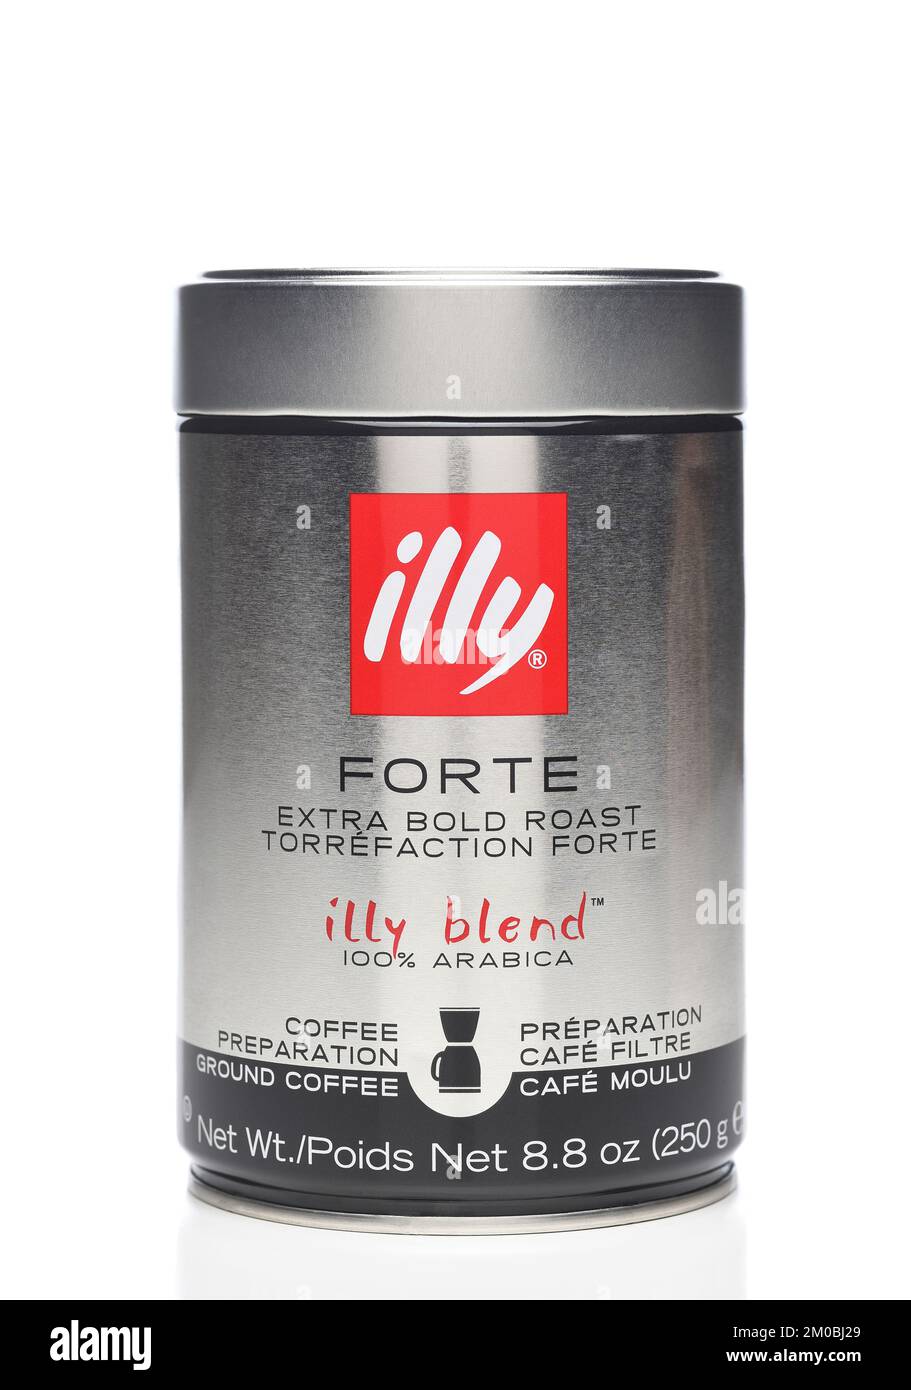 Illy Coffee Extra Dark Roast Ground Coffee